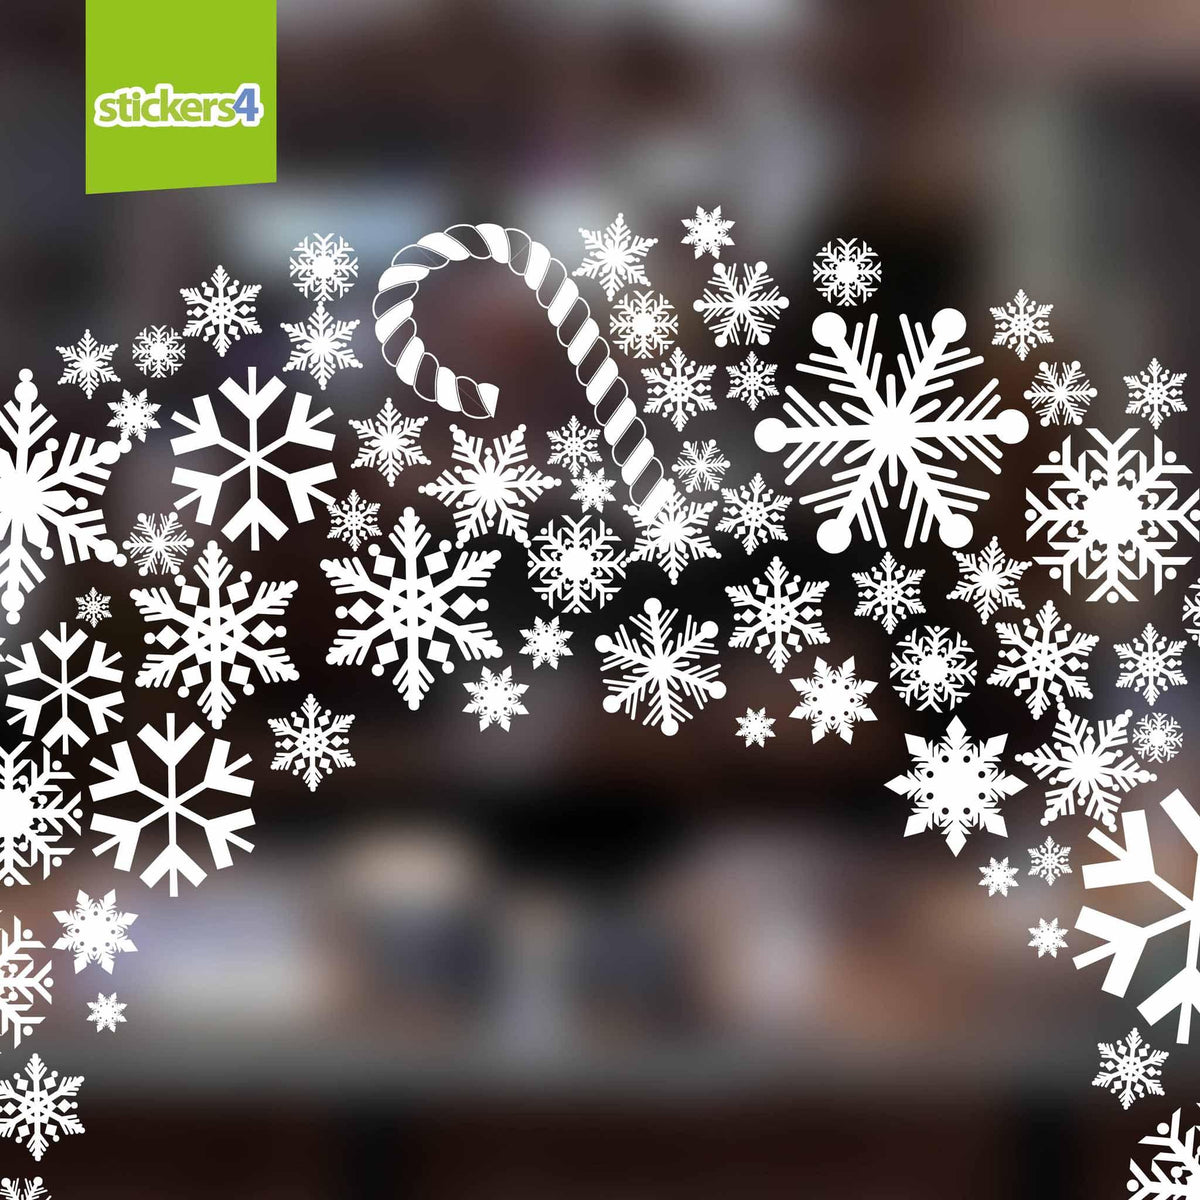 Snowflake Wreath Window Cling Sticker Christmas Window Display